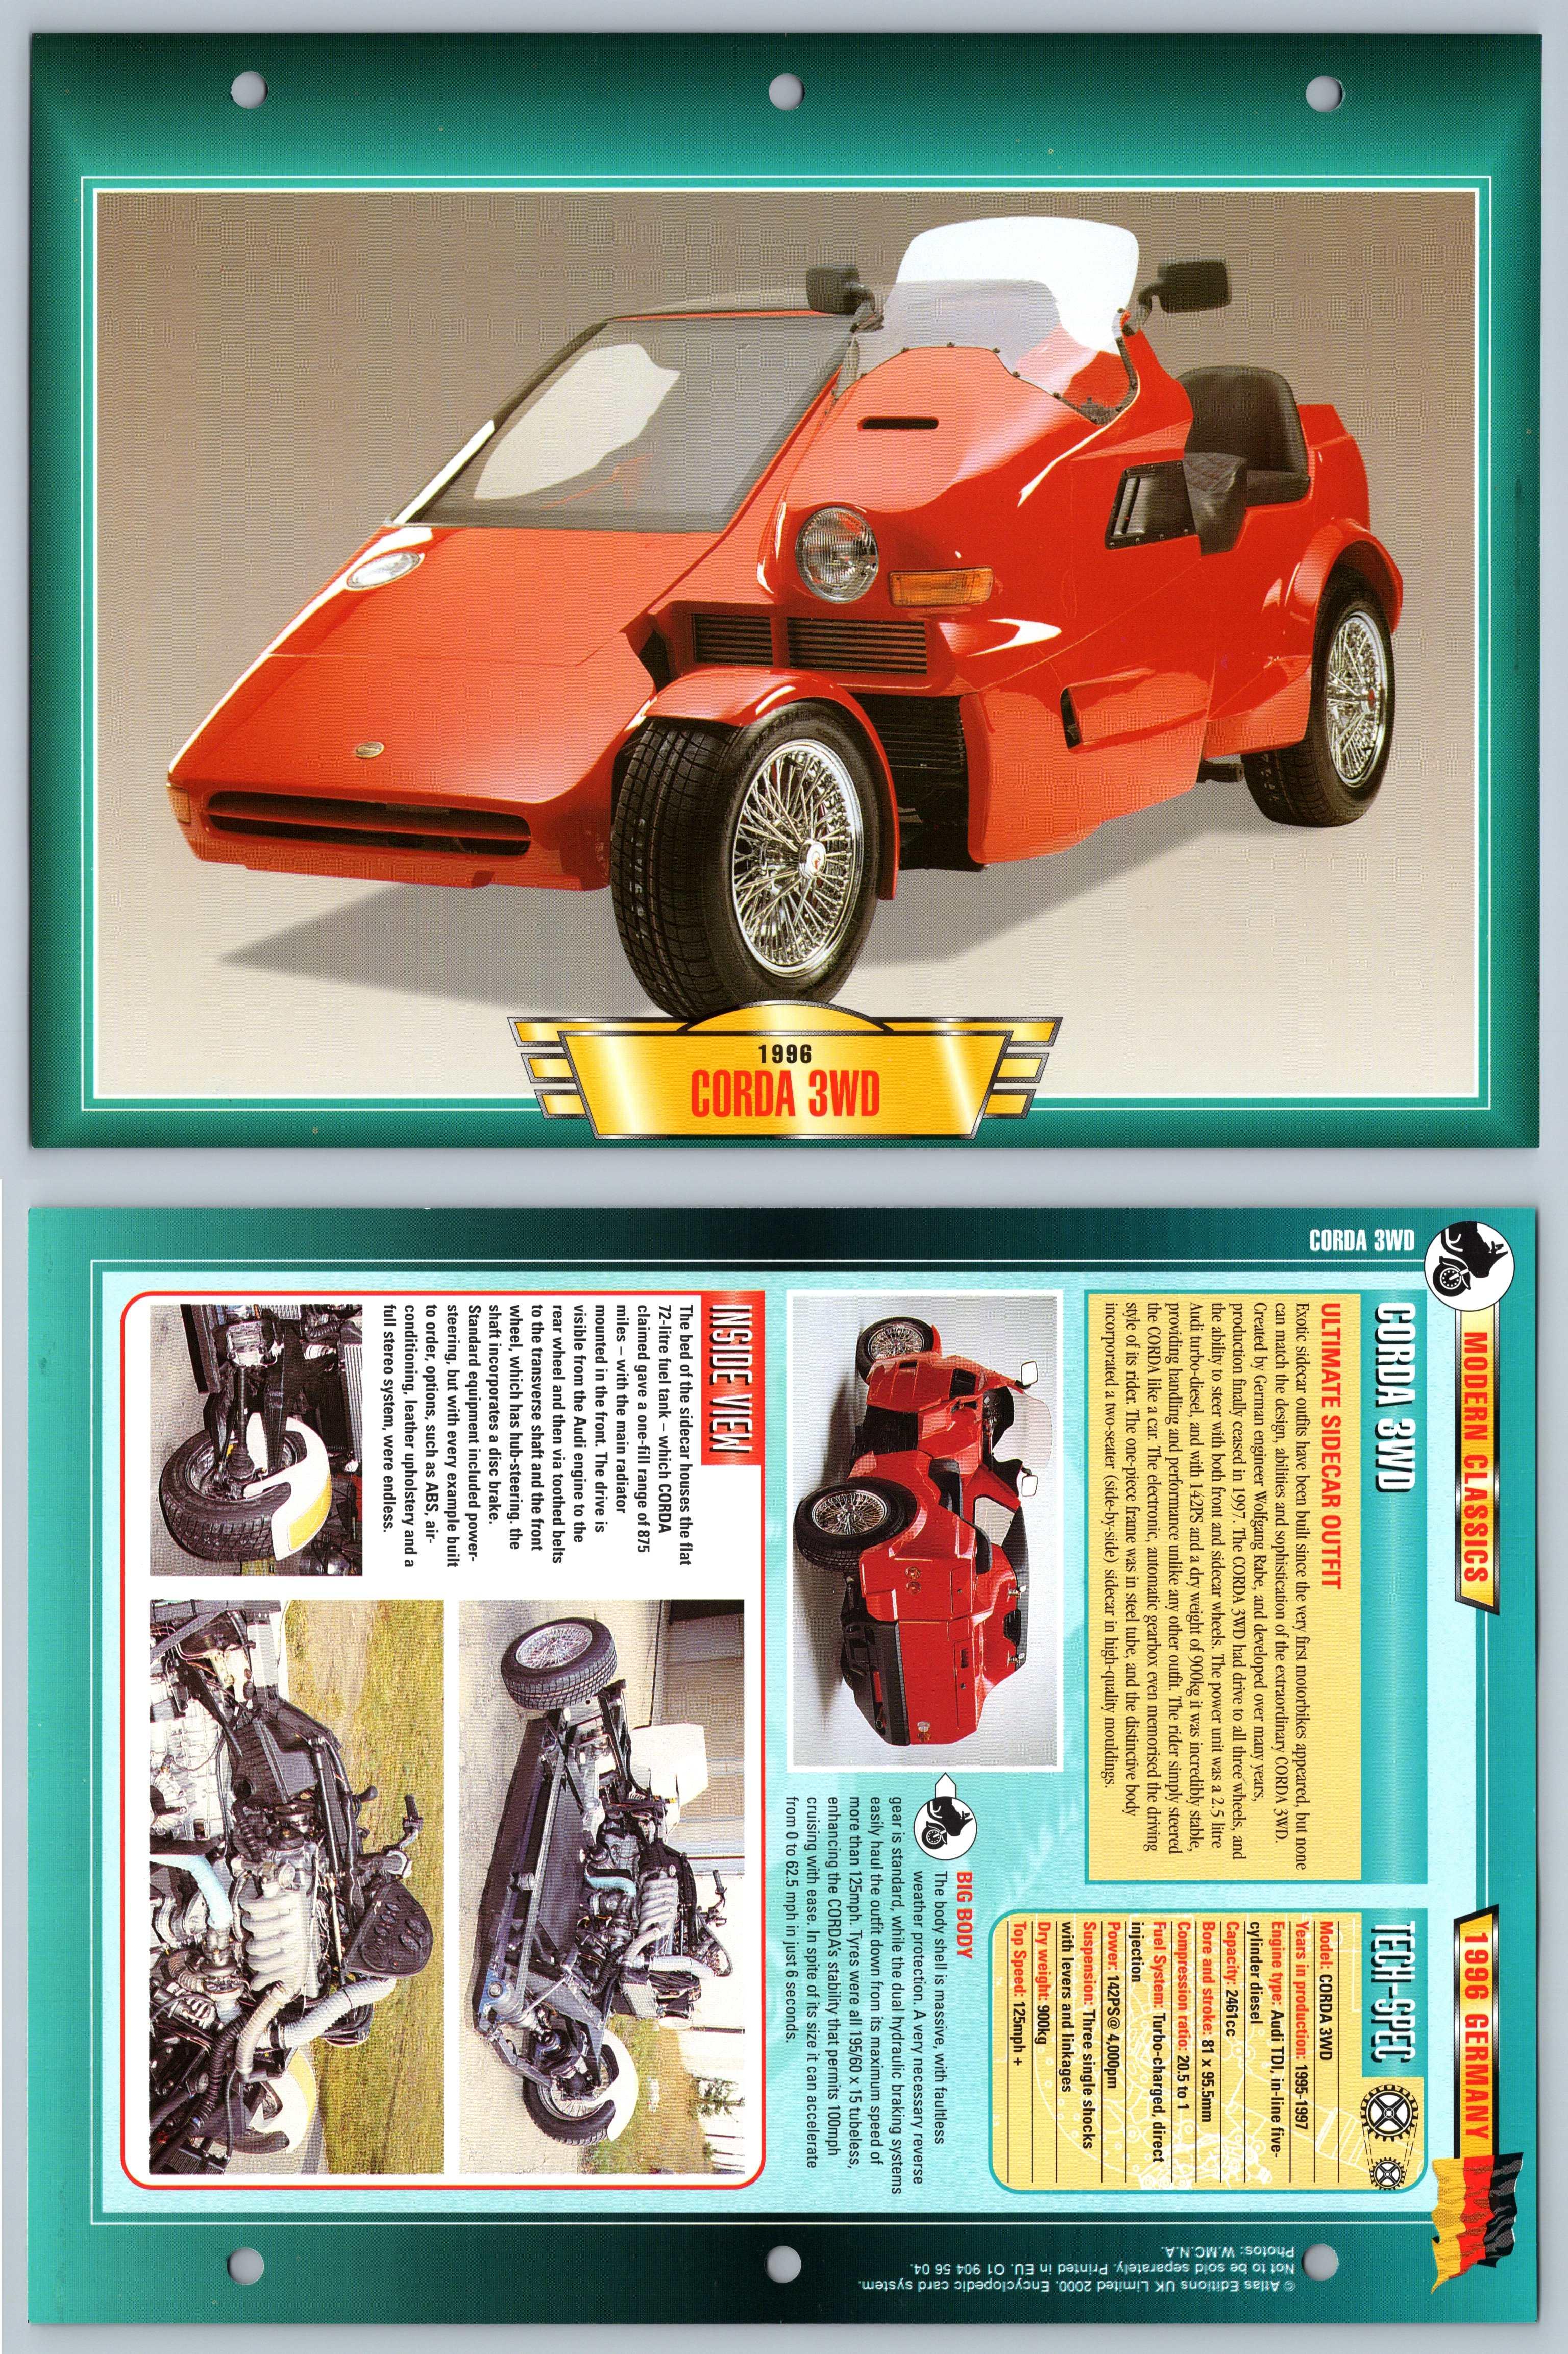 Corda 3WD - 1996 - Modern Classics - Atlas Motorbike Fact File Card